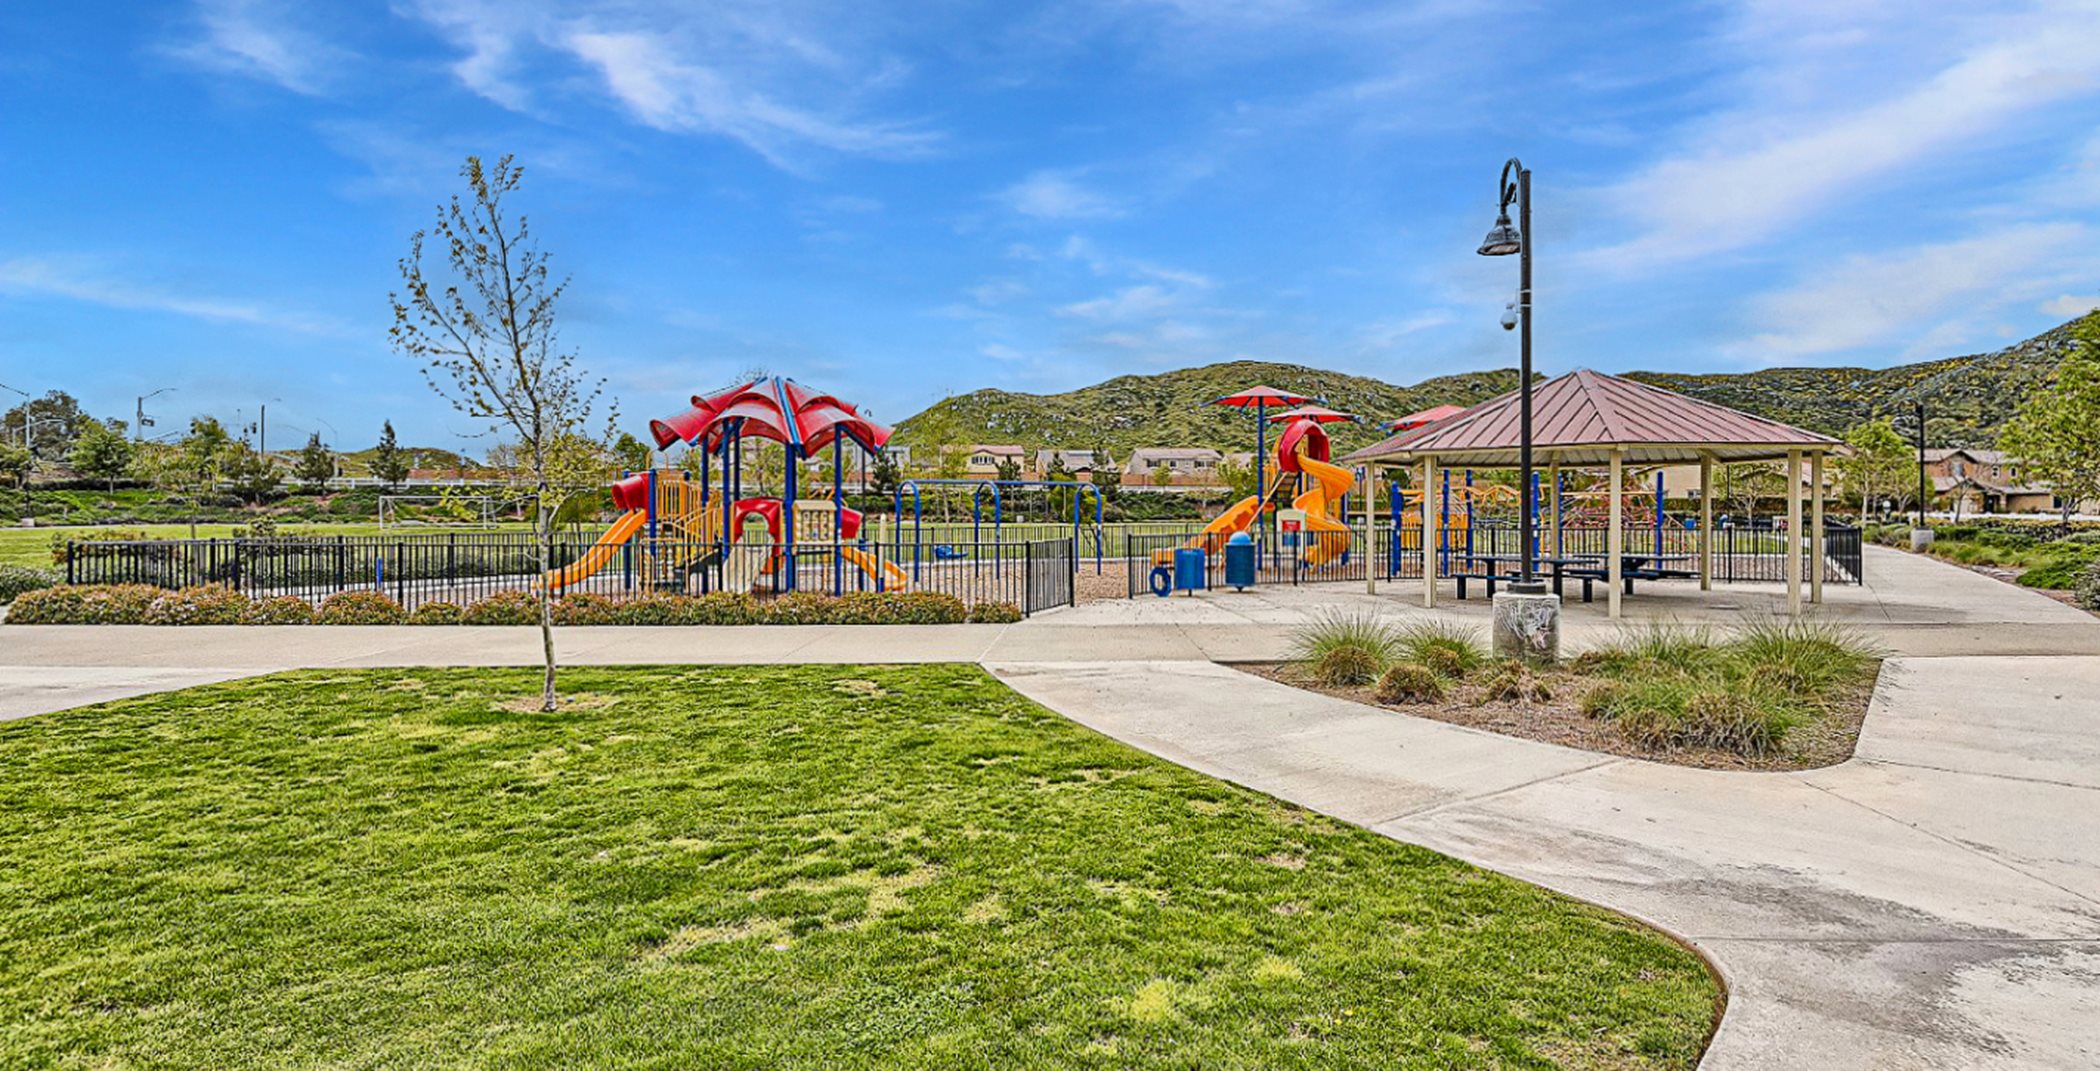 Conestoga Park playground